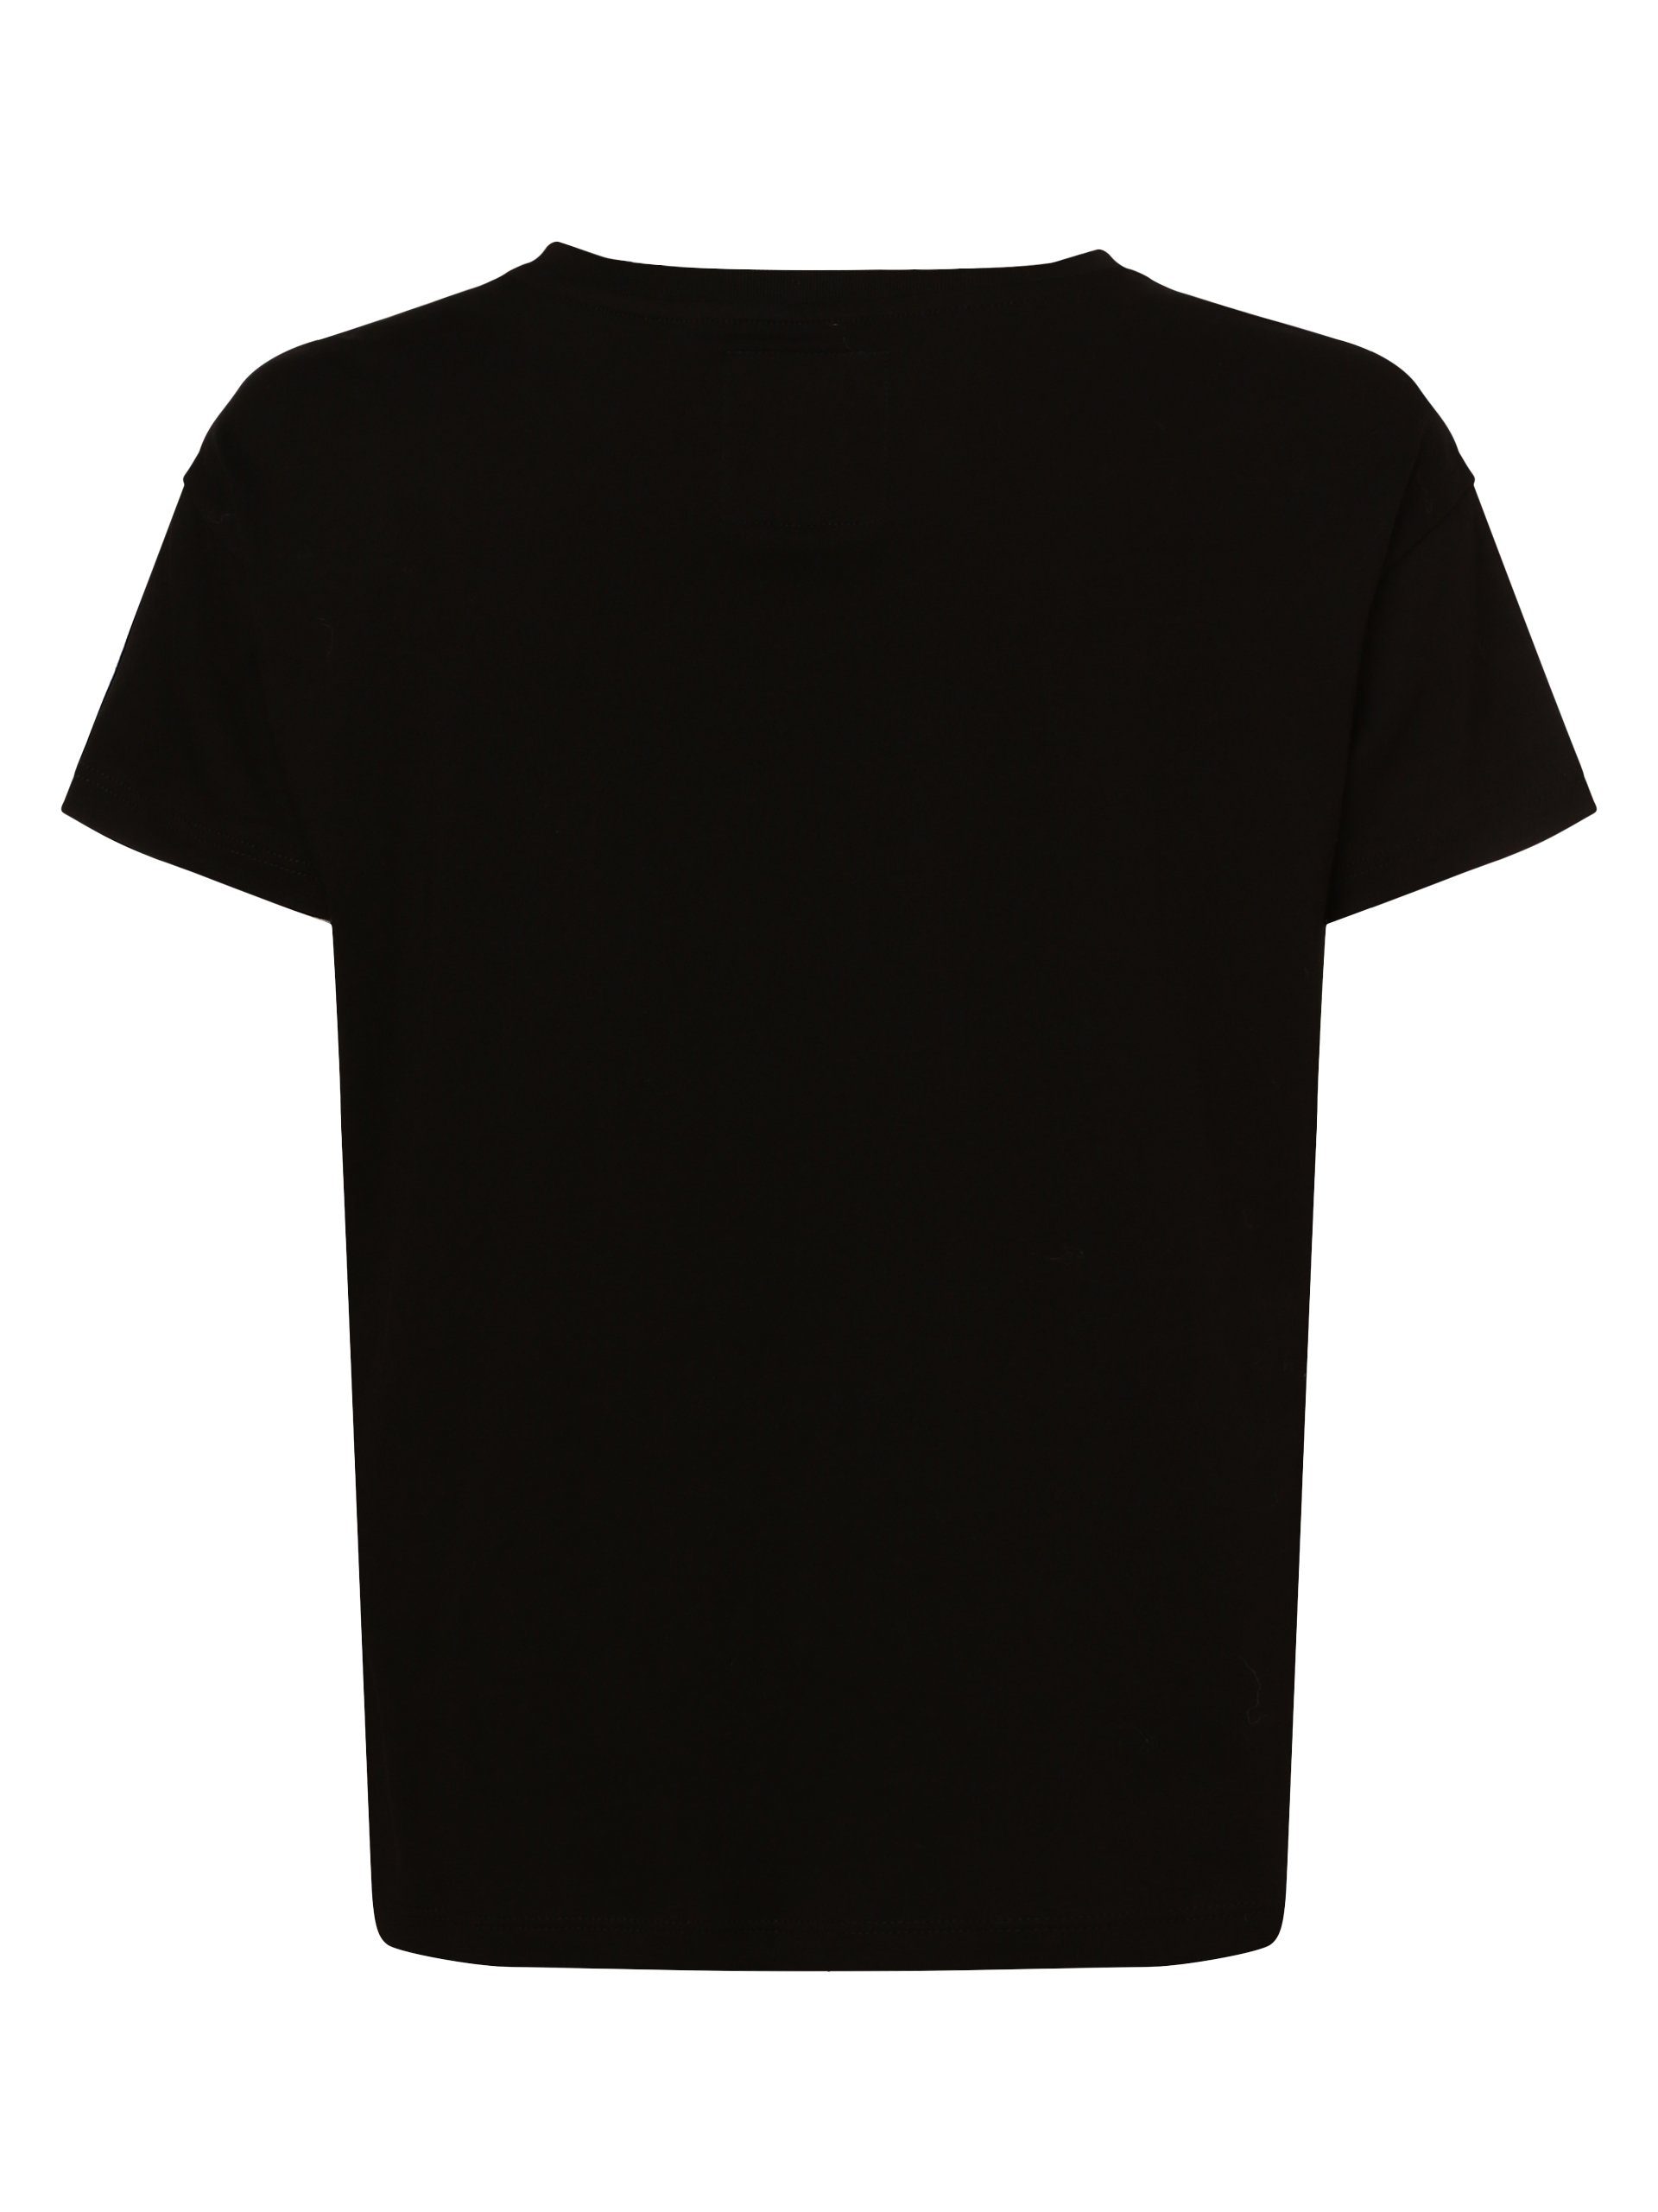 schwarz Connected T-Shirt Armani Exchange